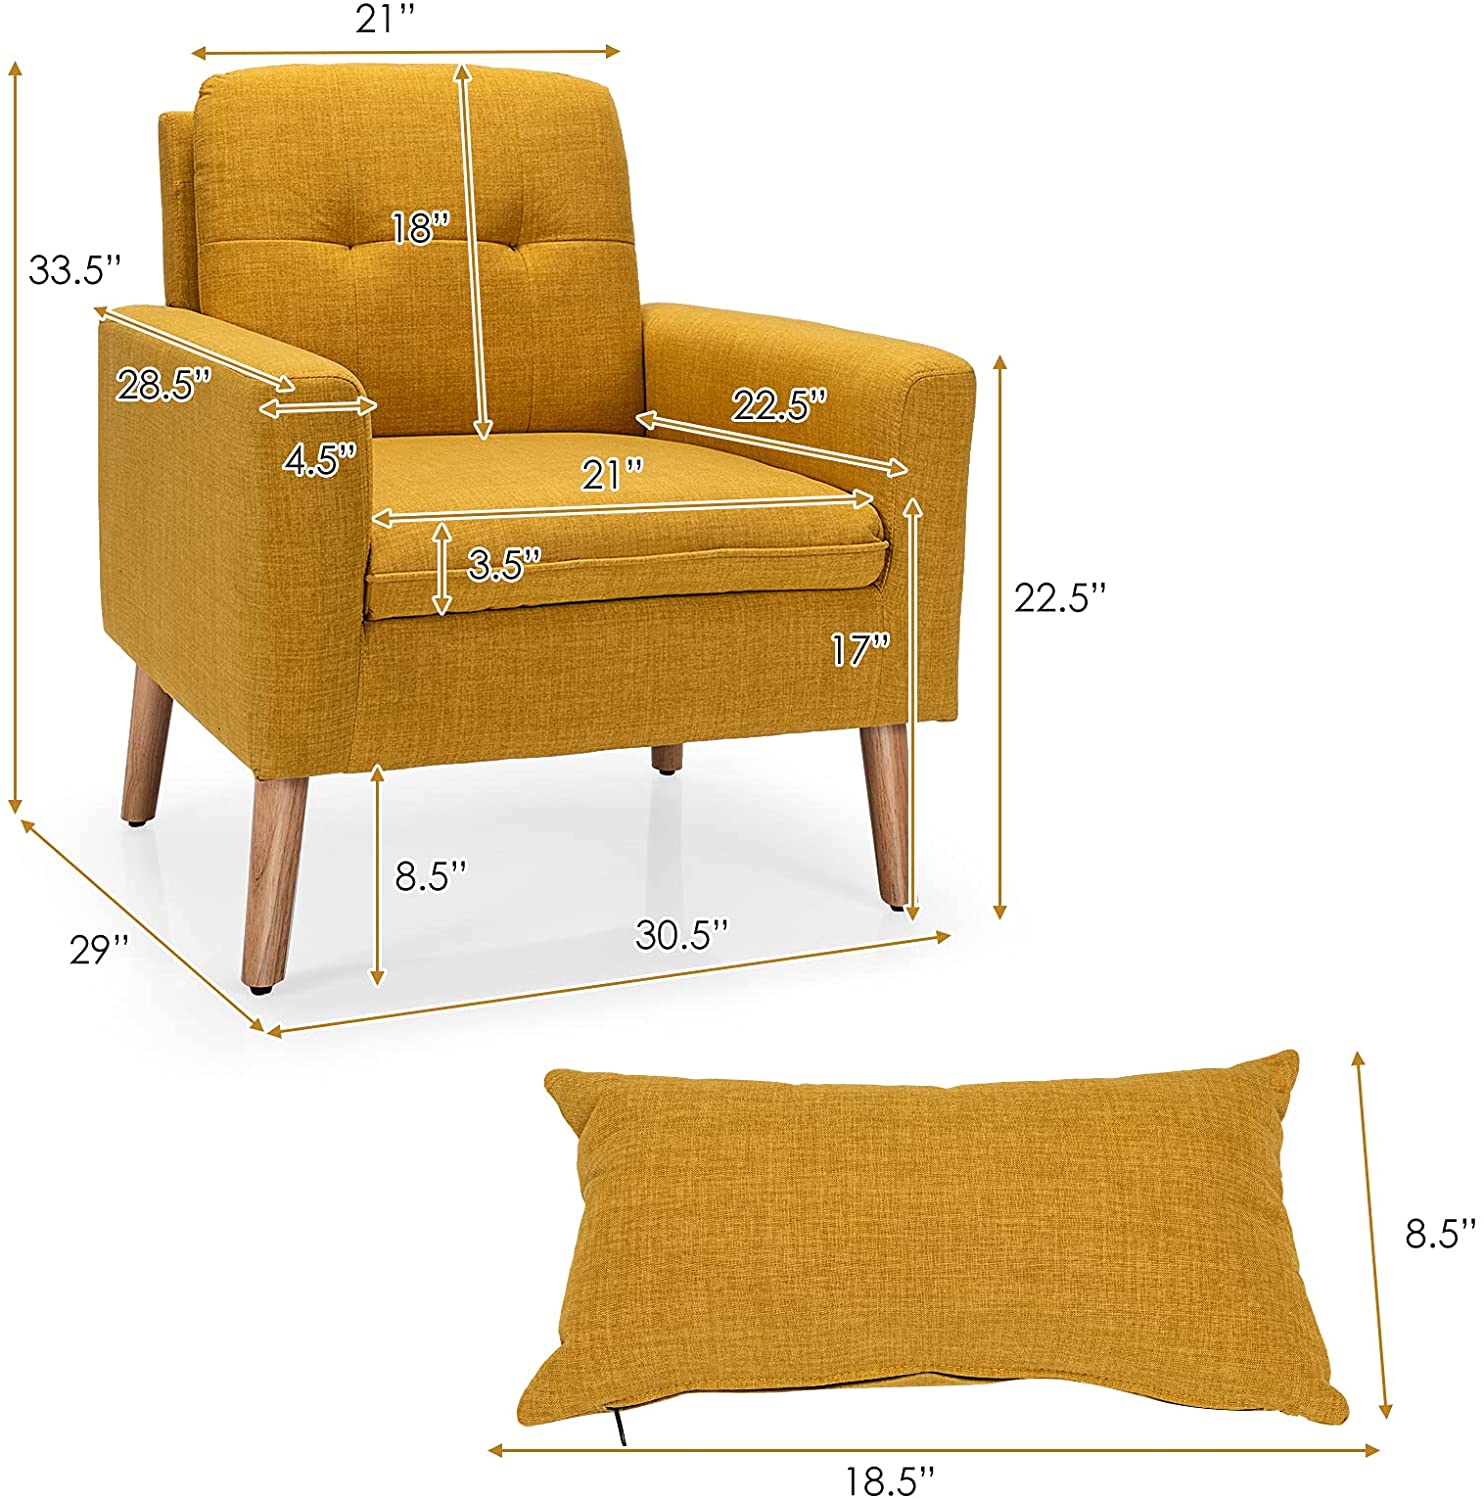 Giantex Modern Leisure Chair for Living Room Bedroom Office